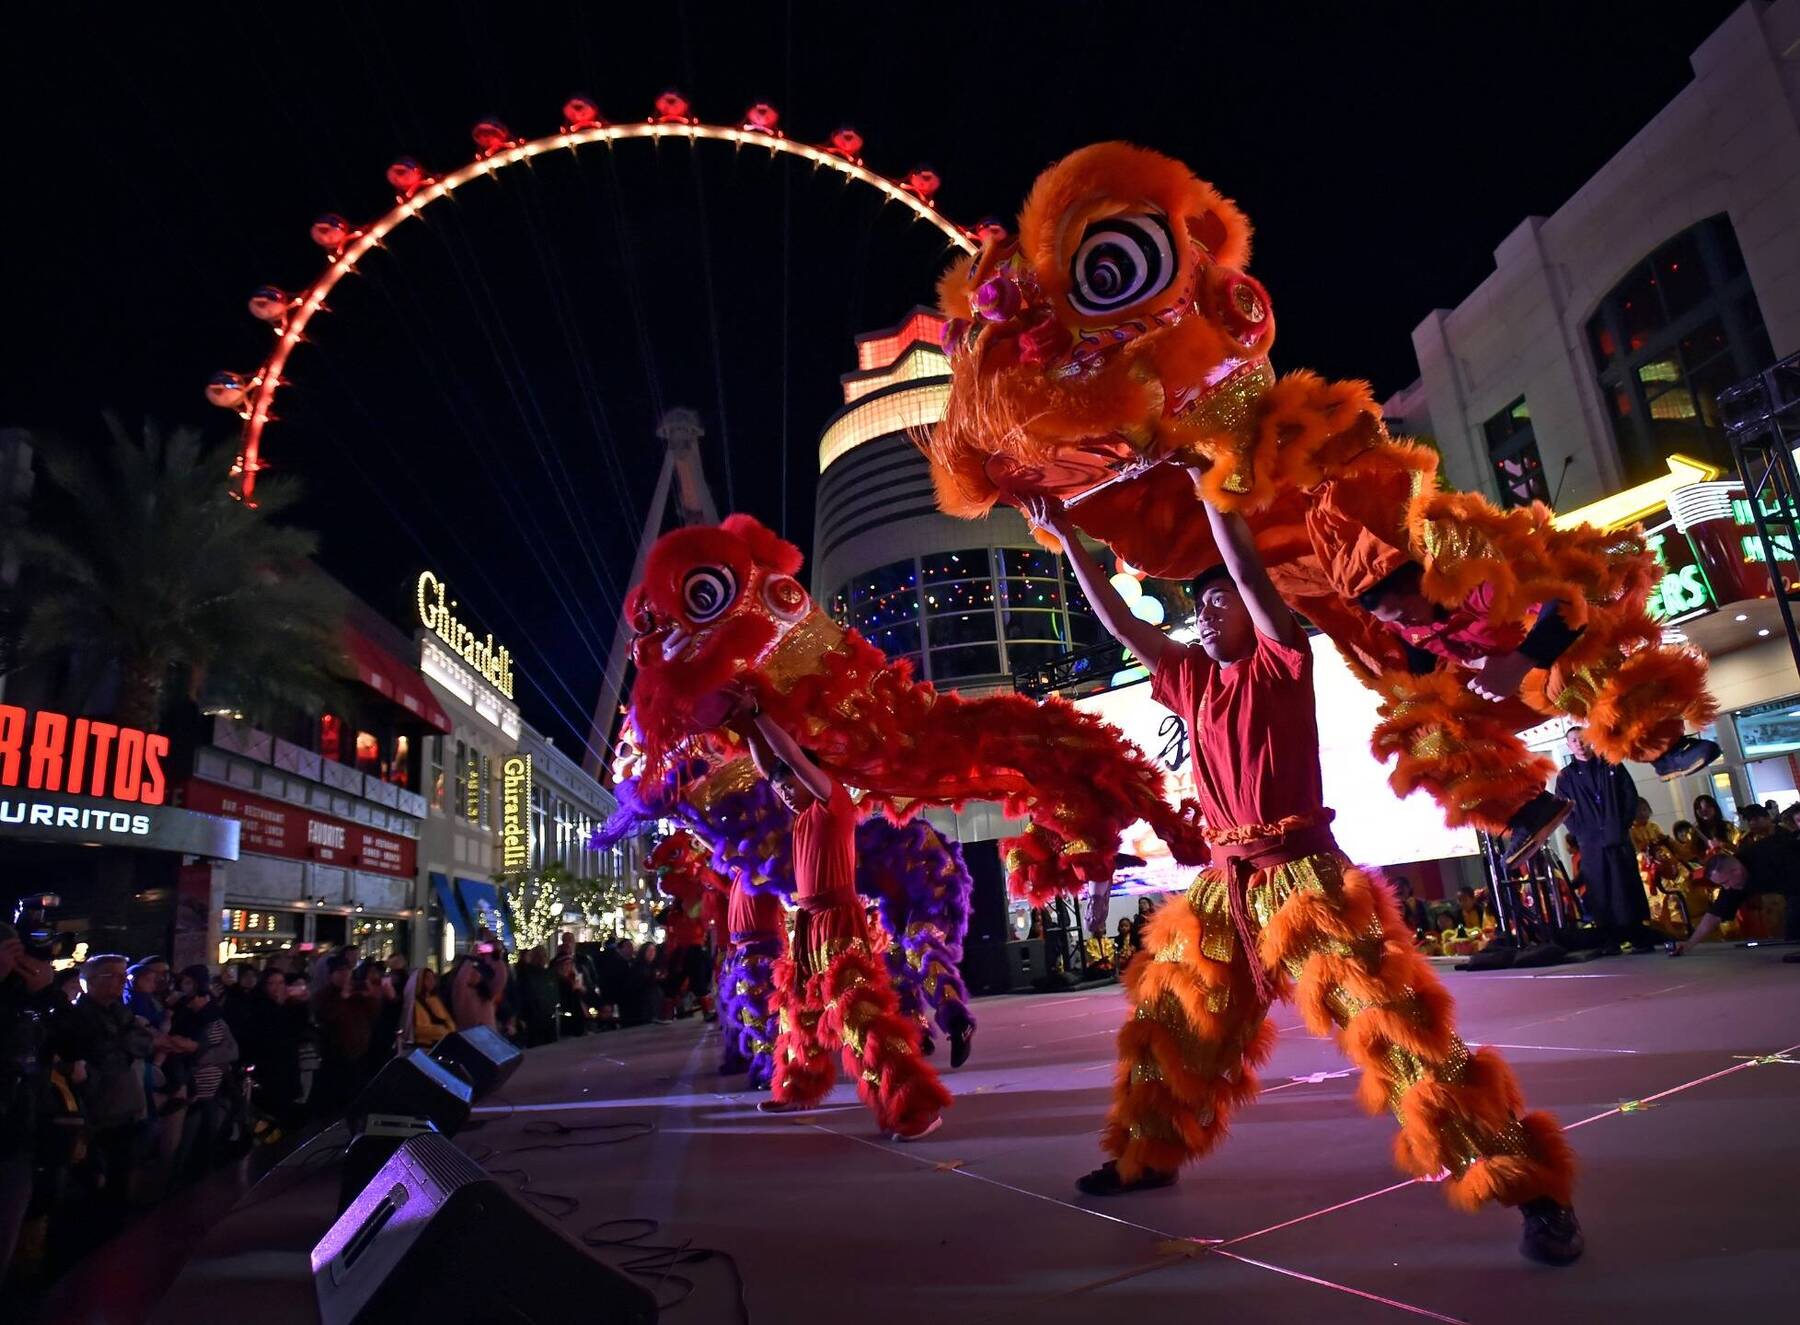 The Venetian Resort celebrates Chinese New Year with new art